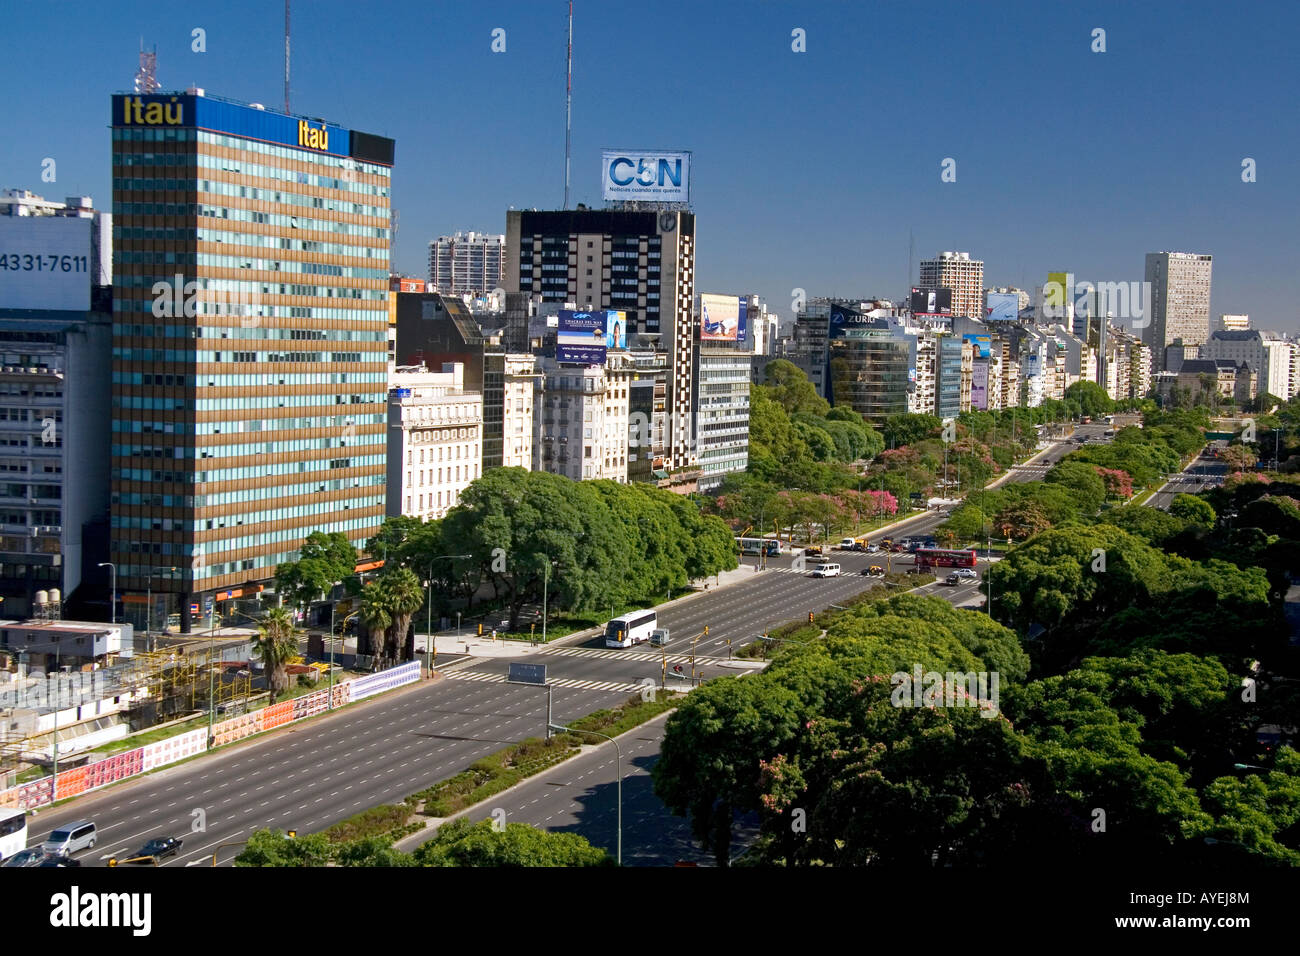 Highrise buildings line the Avenida 9 de Julio in Buenos Aires Argentina Stock Photo